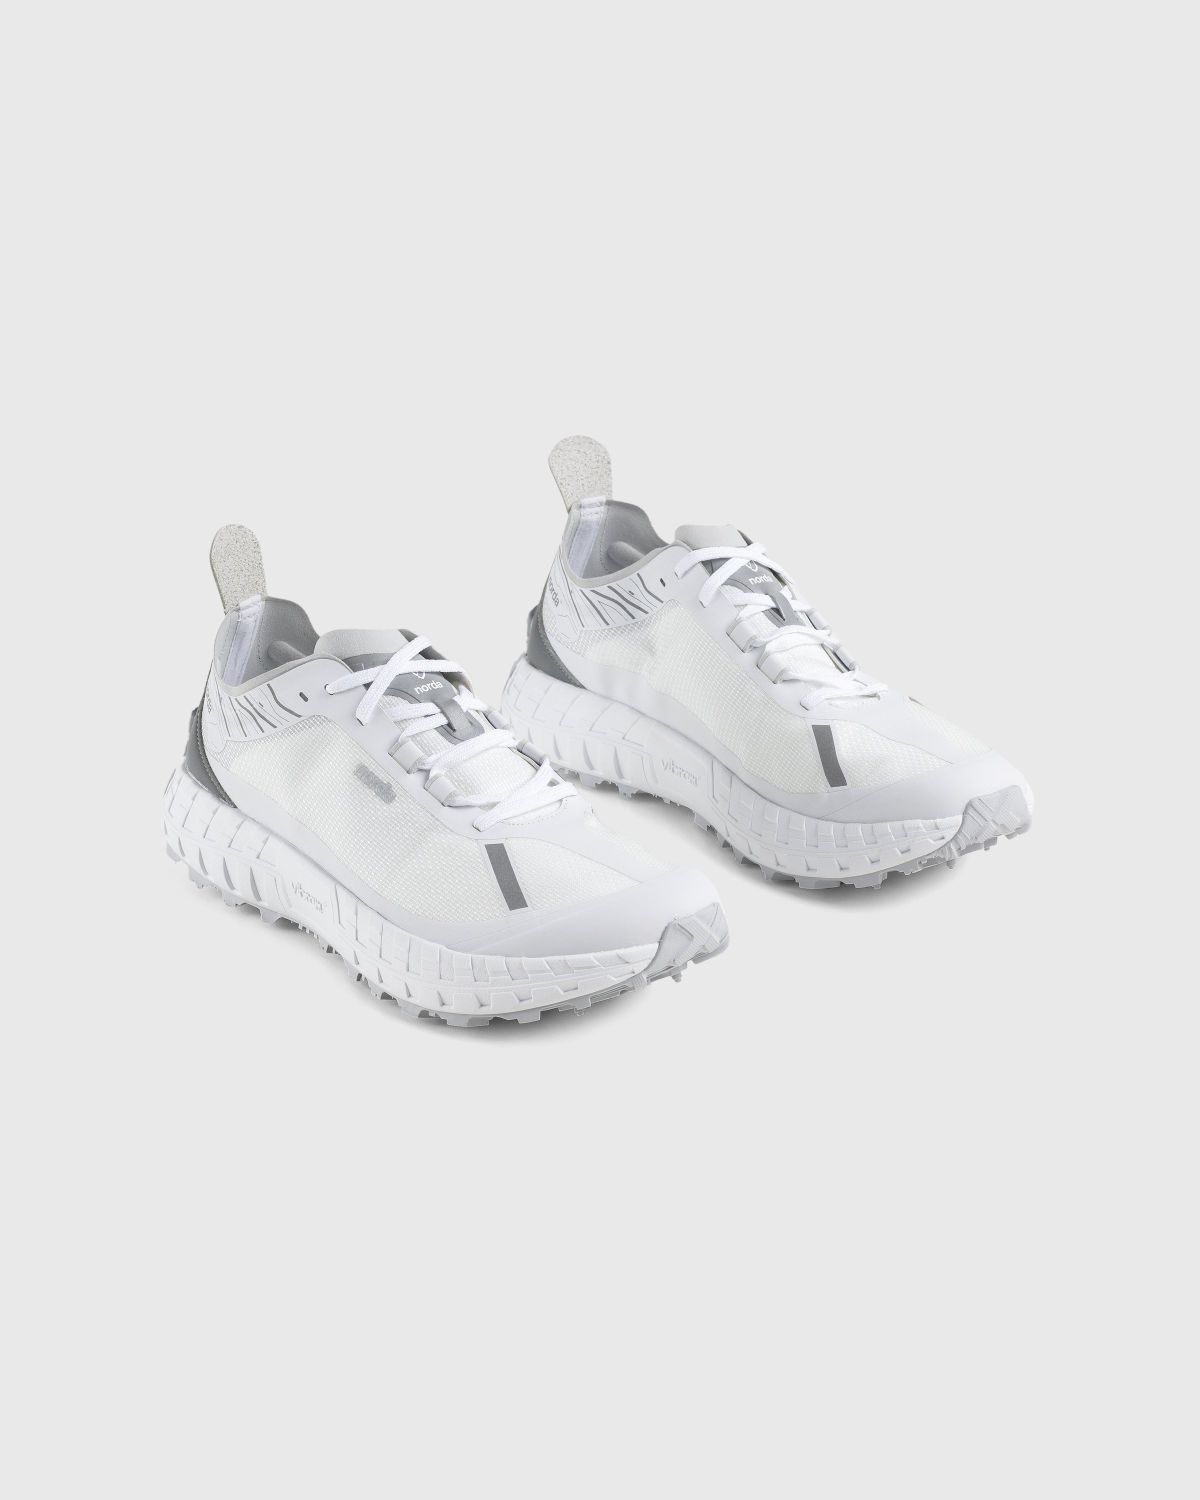 Norda – 001 M White/Grey - Low Top Sneakers - White - Image 3